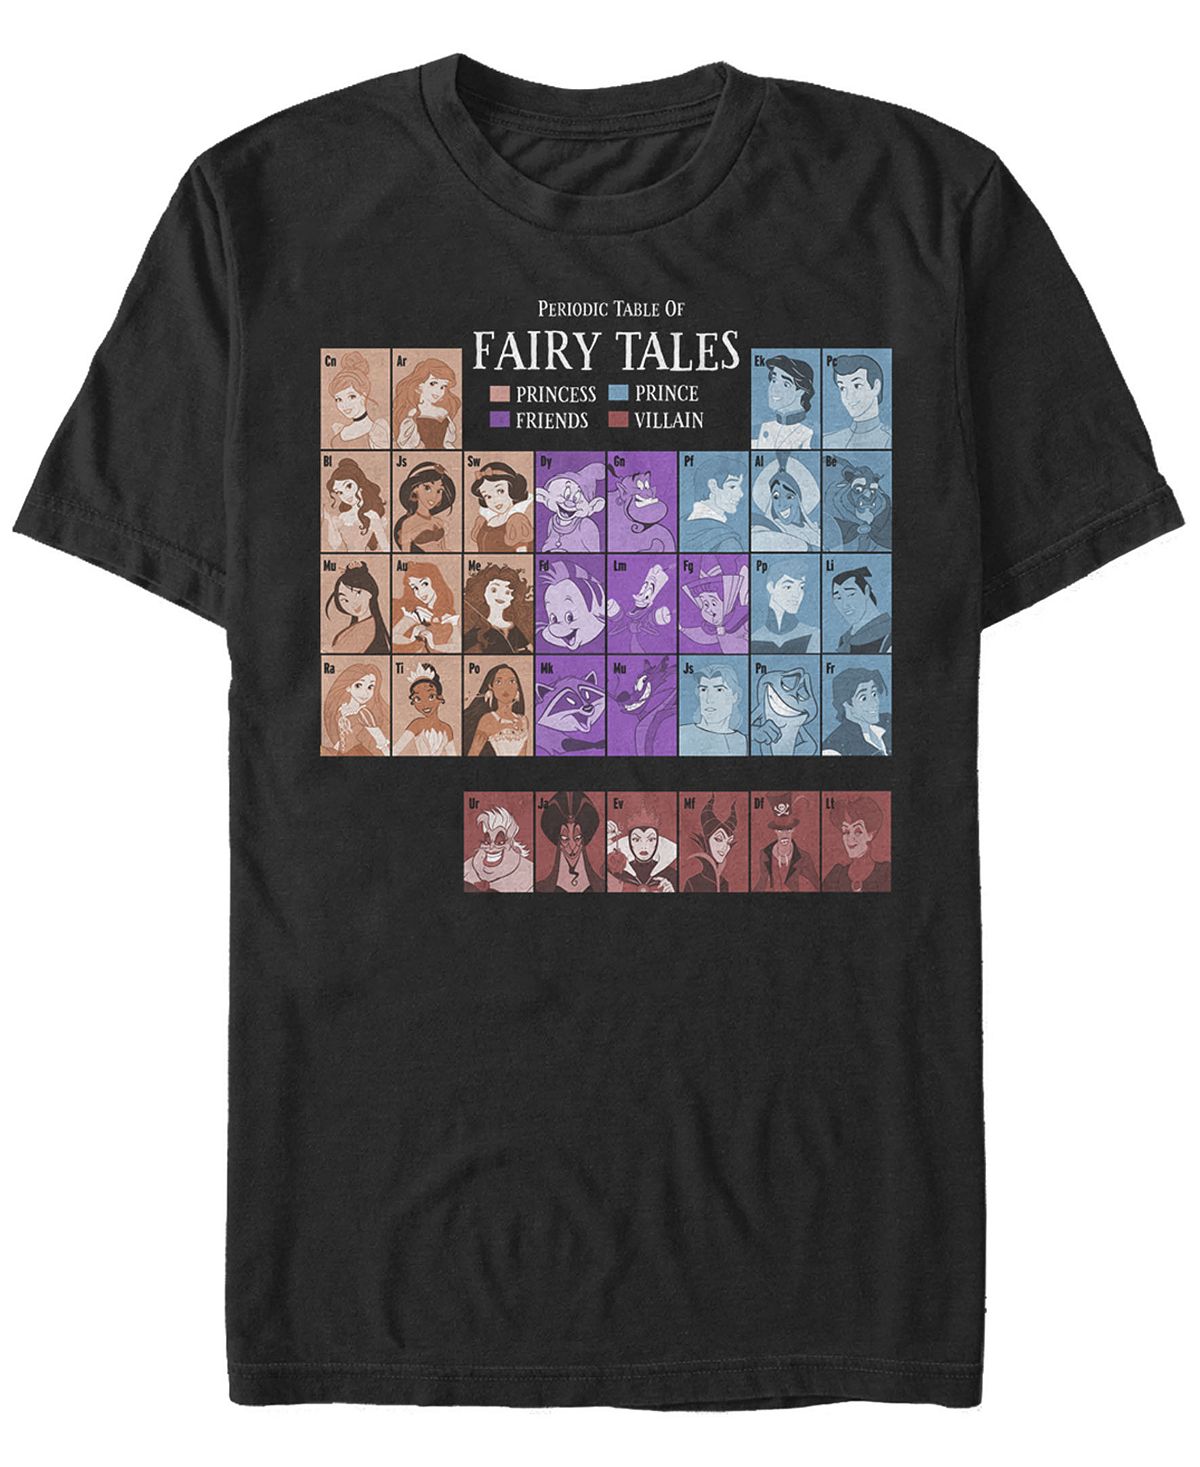 Мужская футболка с короткими рукавами princess periodic table of fairy tales Fifth Sun, черный цена